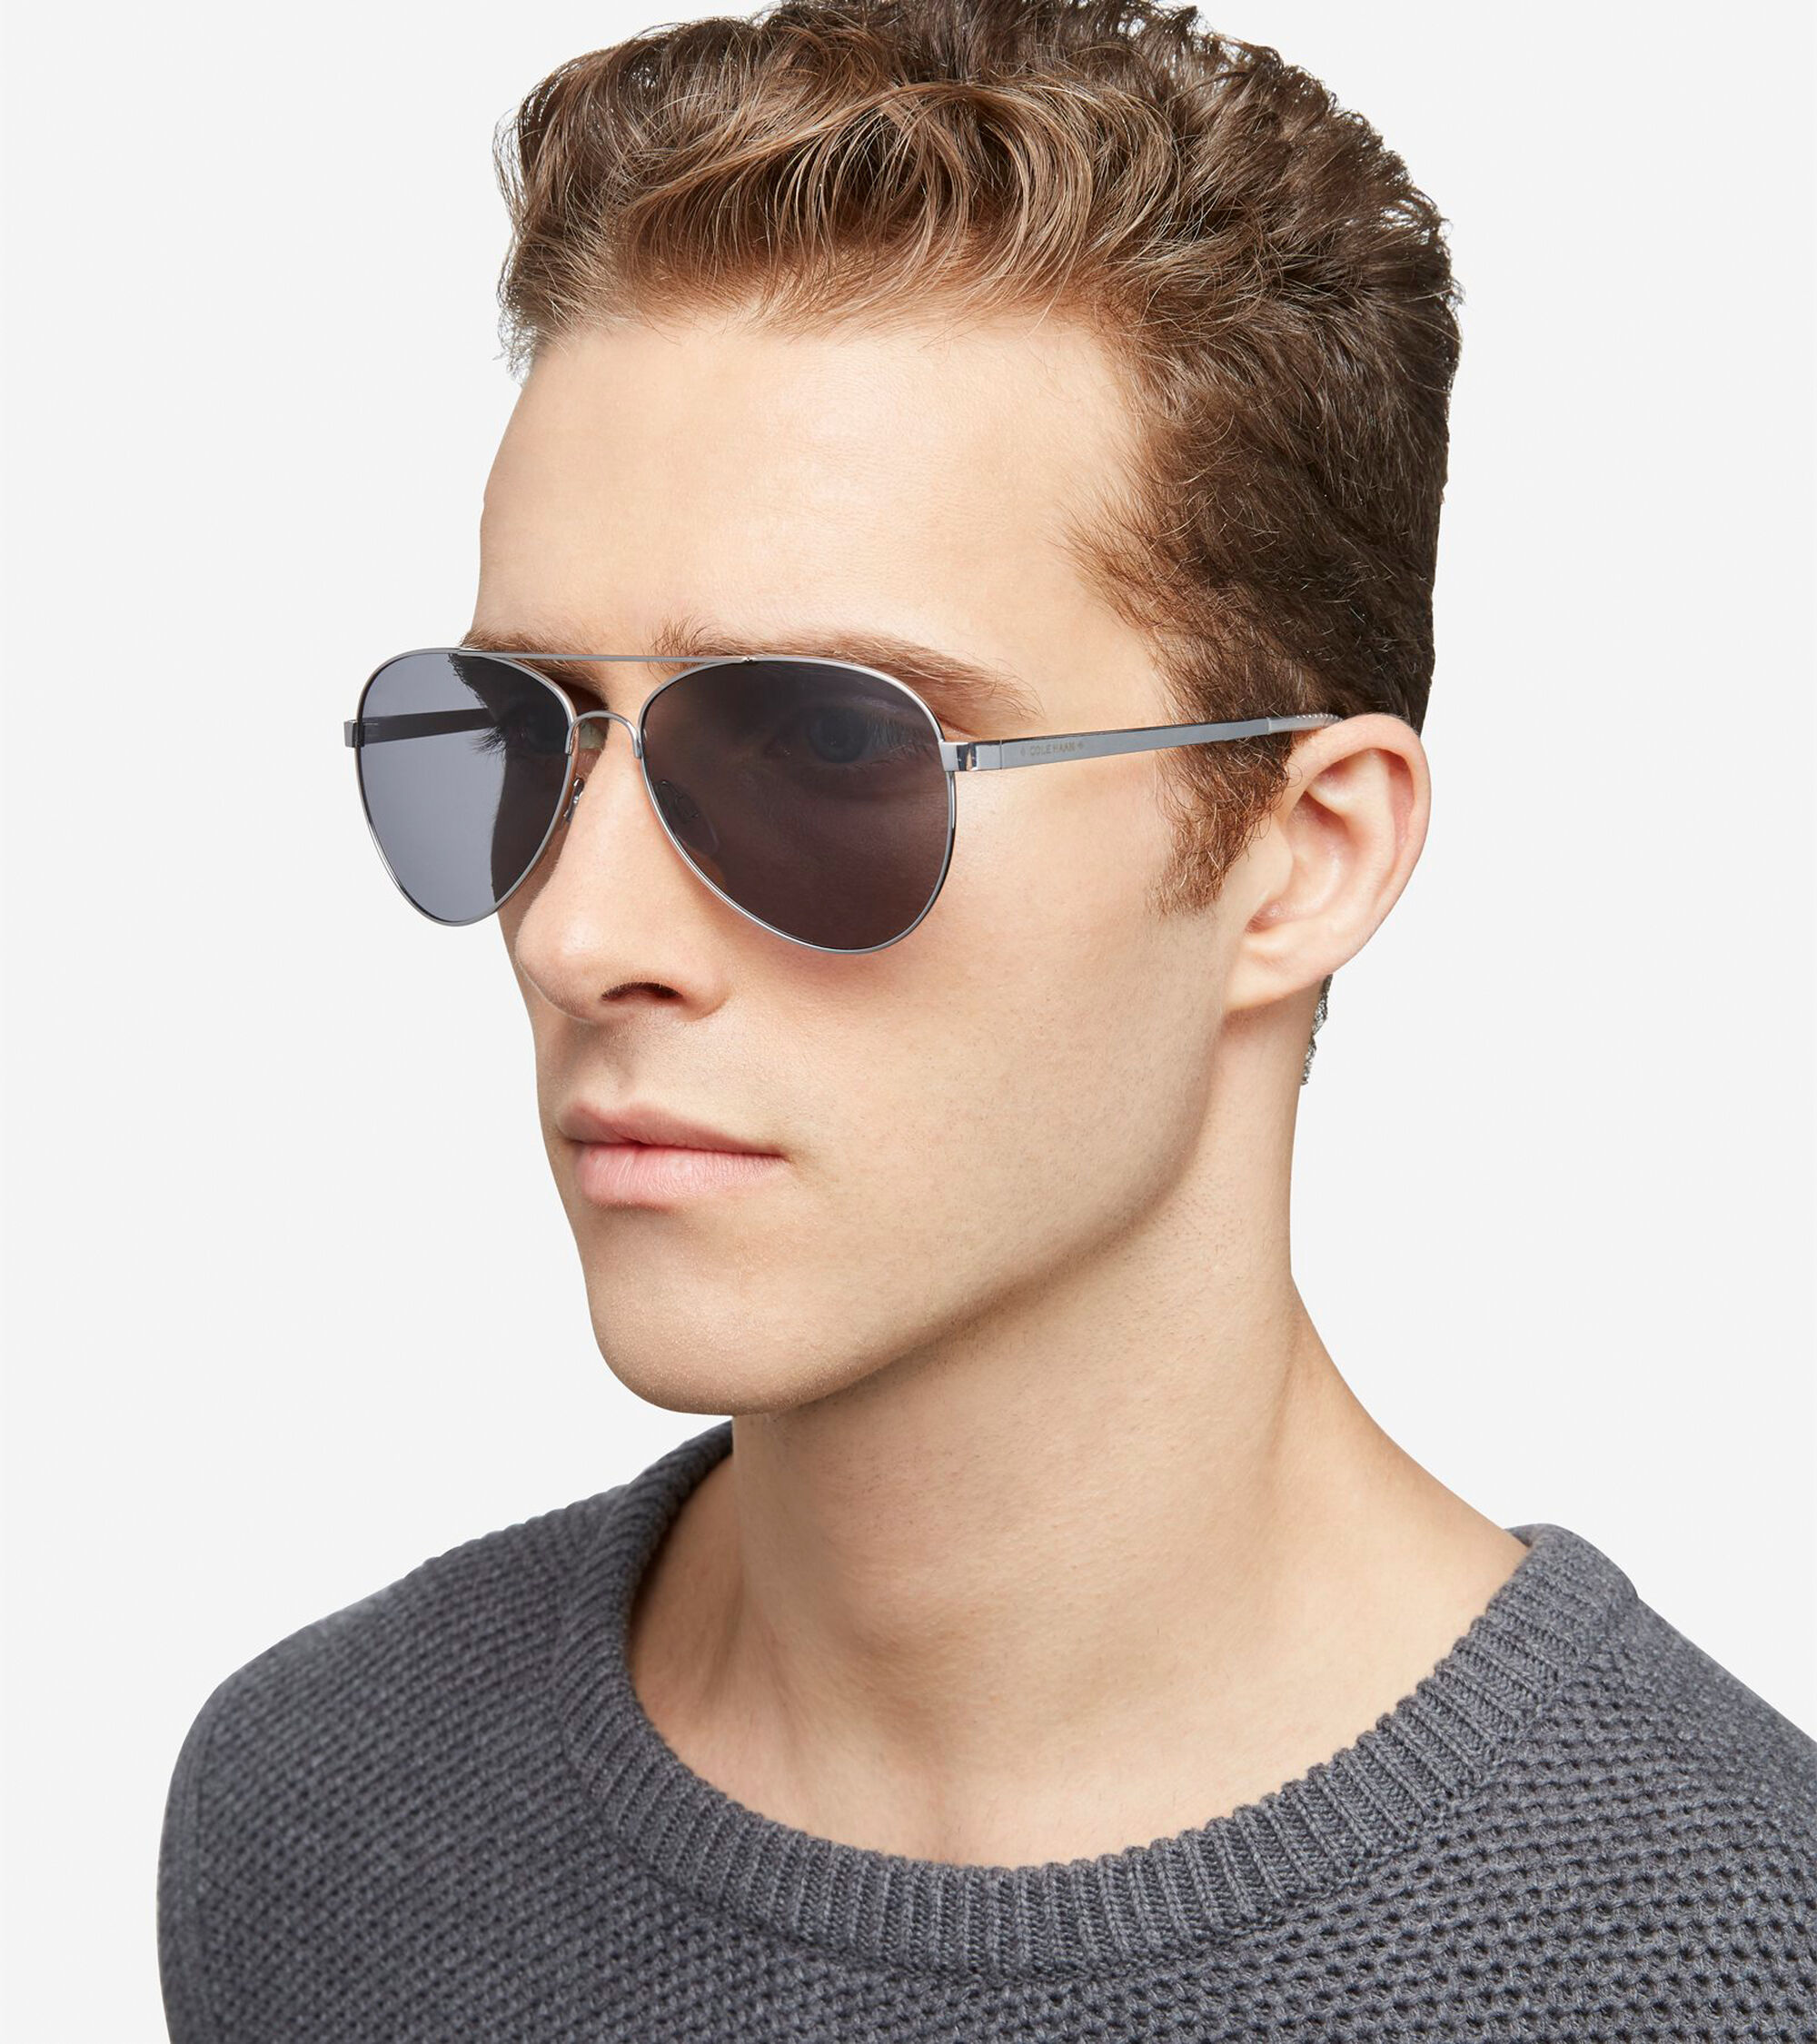 order sunglasses